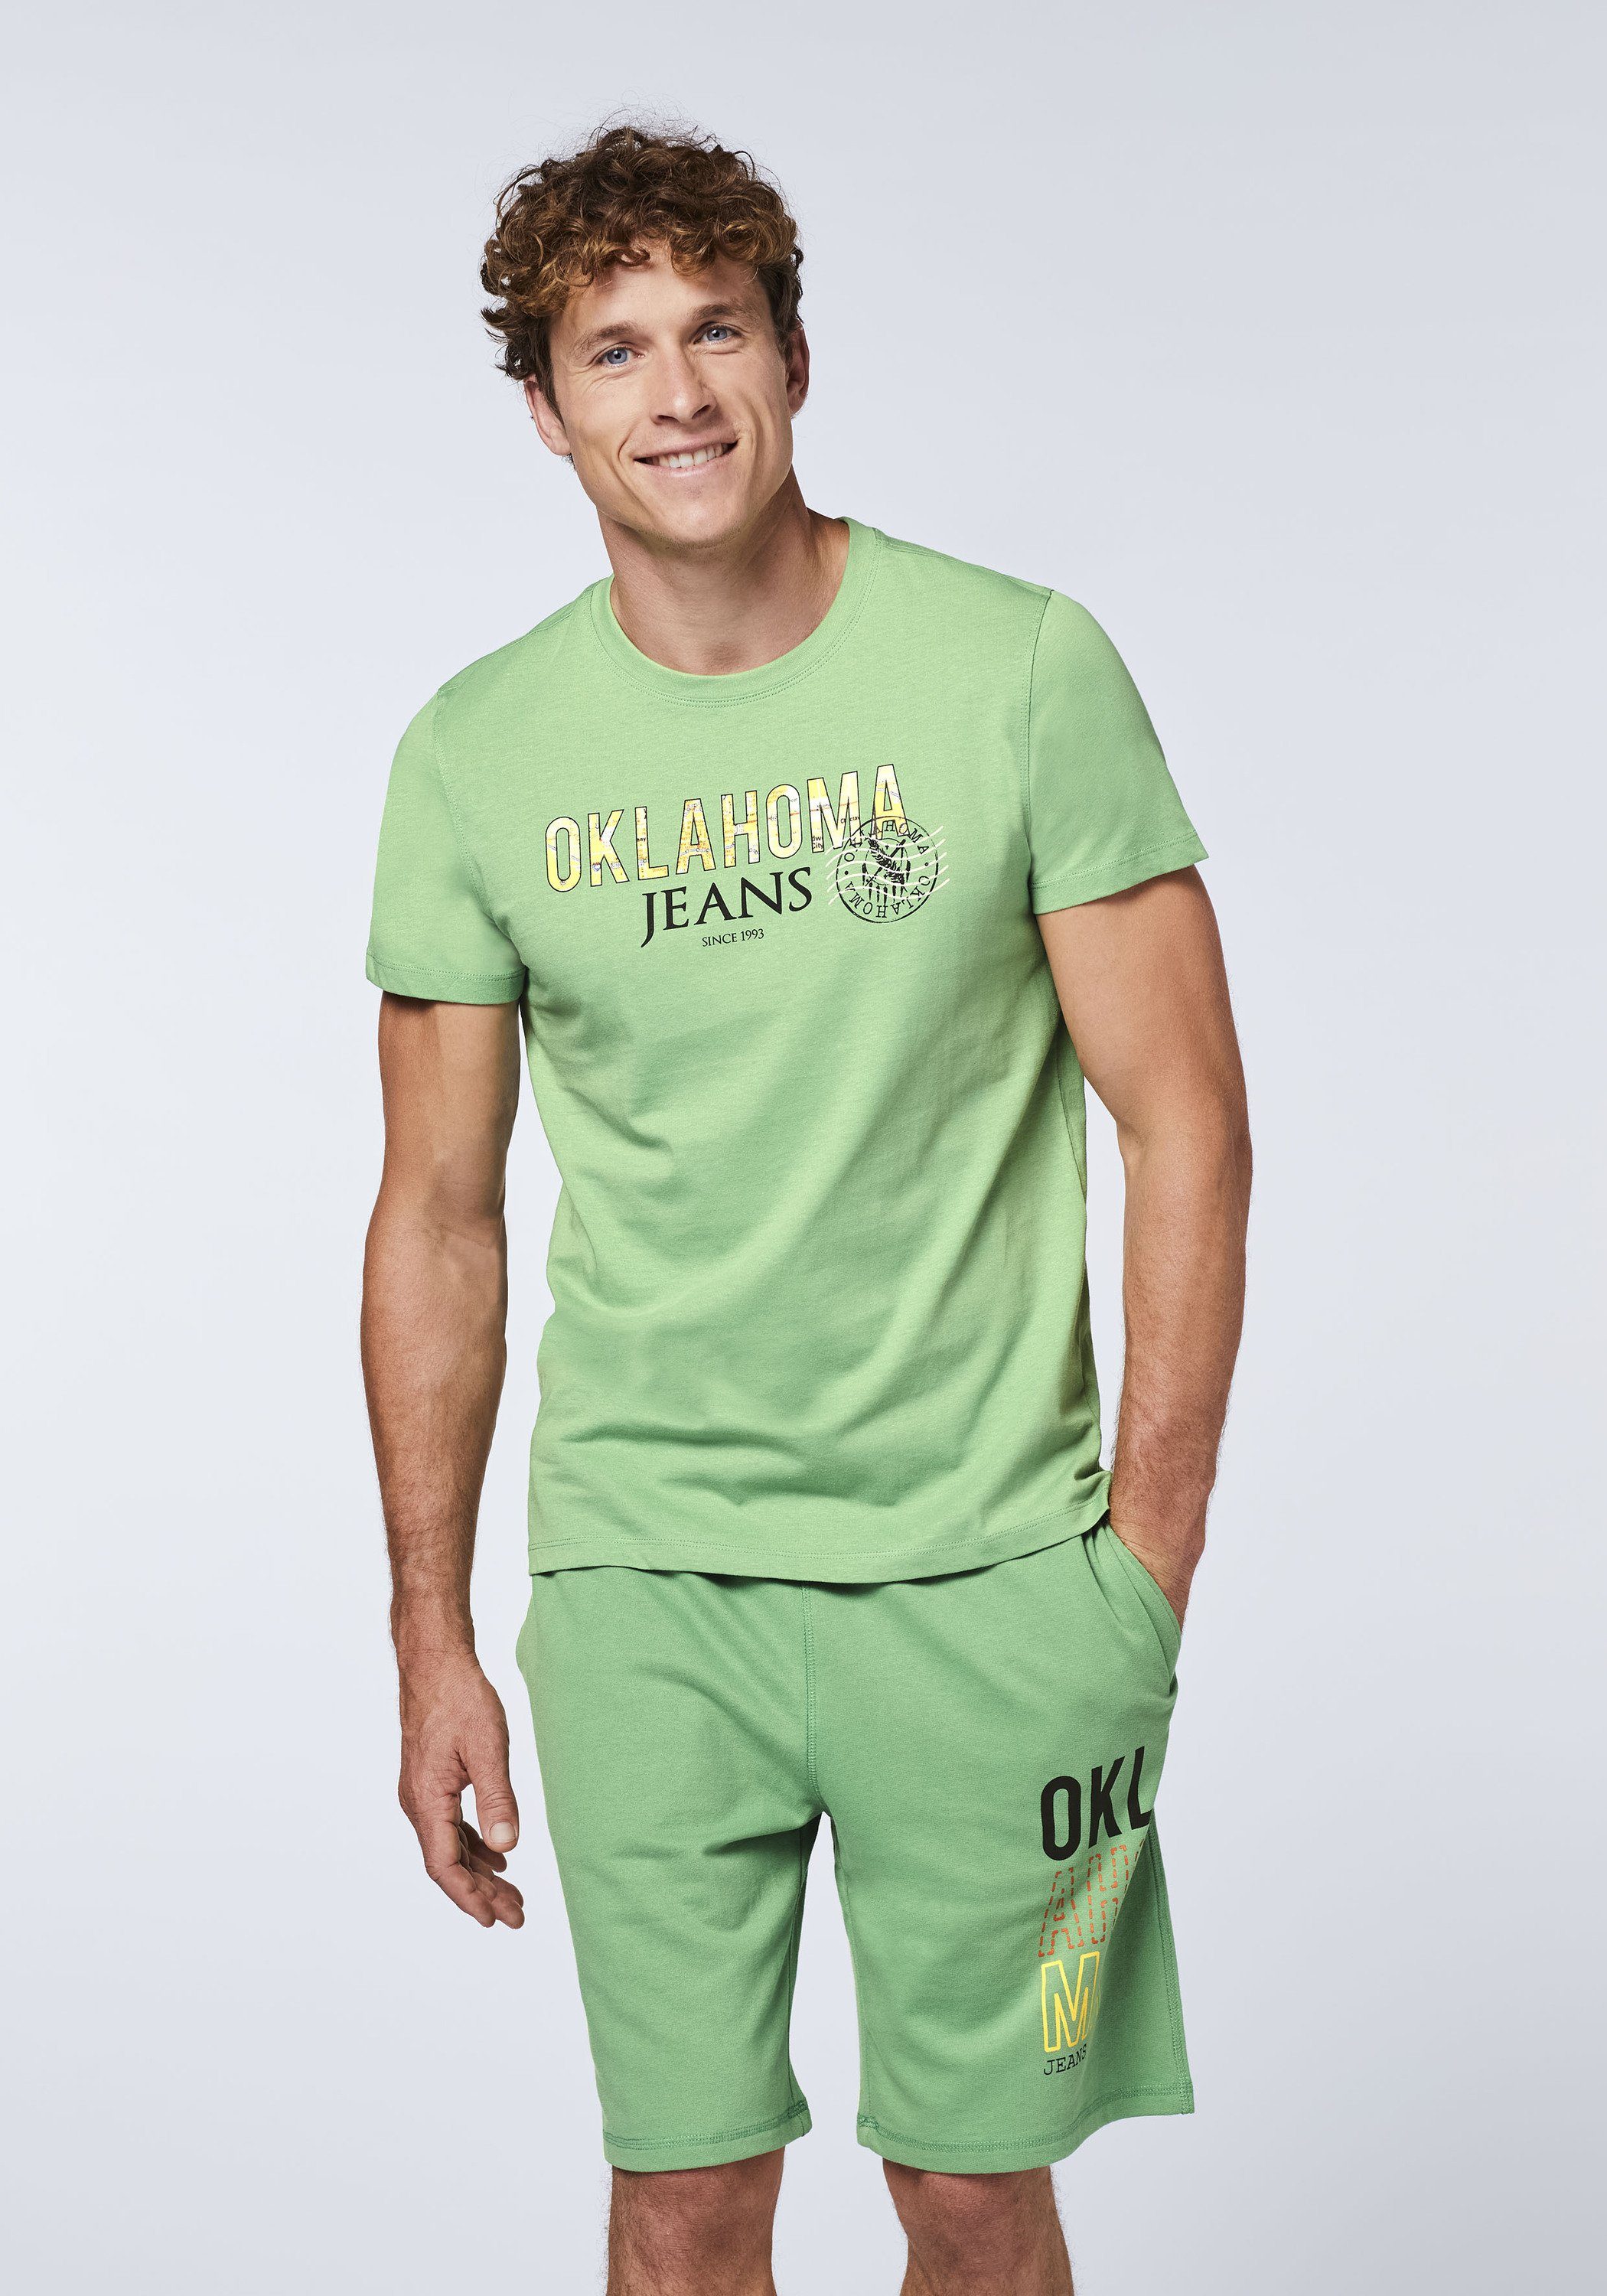 Print-Shirt Label-Print Jeans 16-6116 im City-Map-Look Shale mit Green Oklahoma